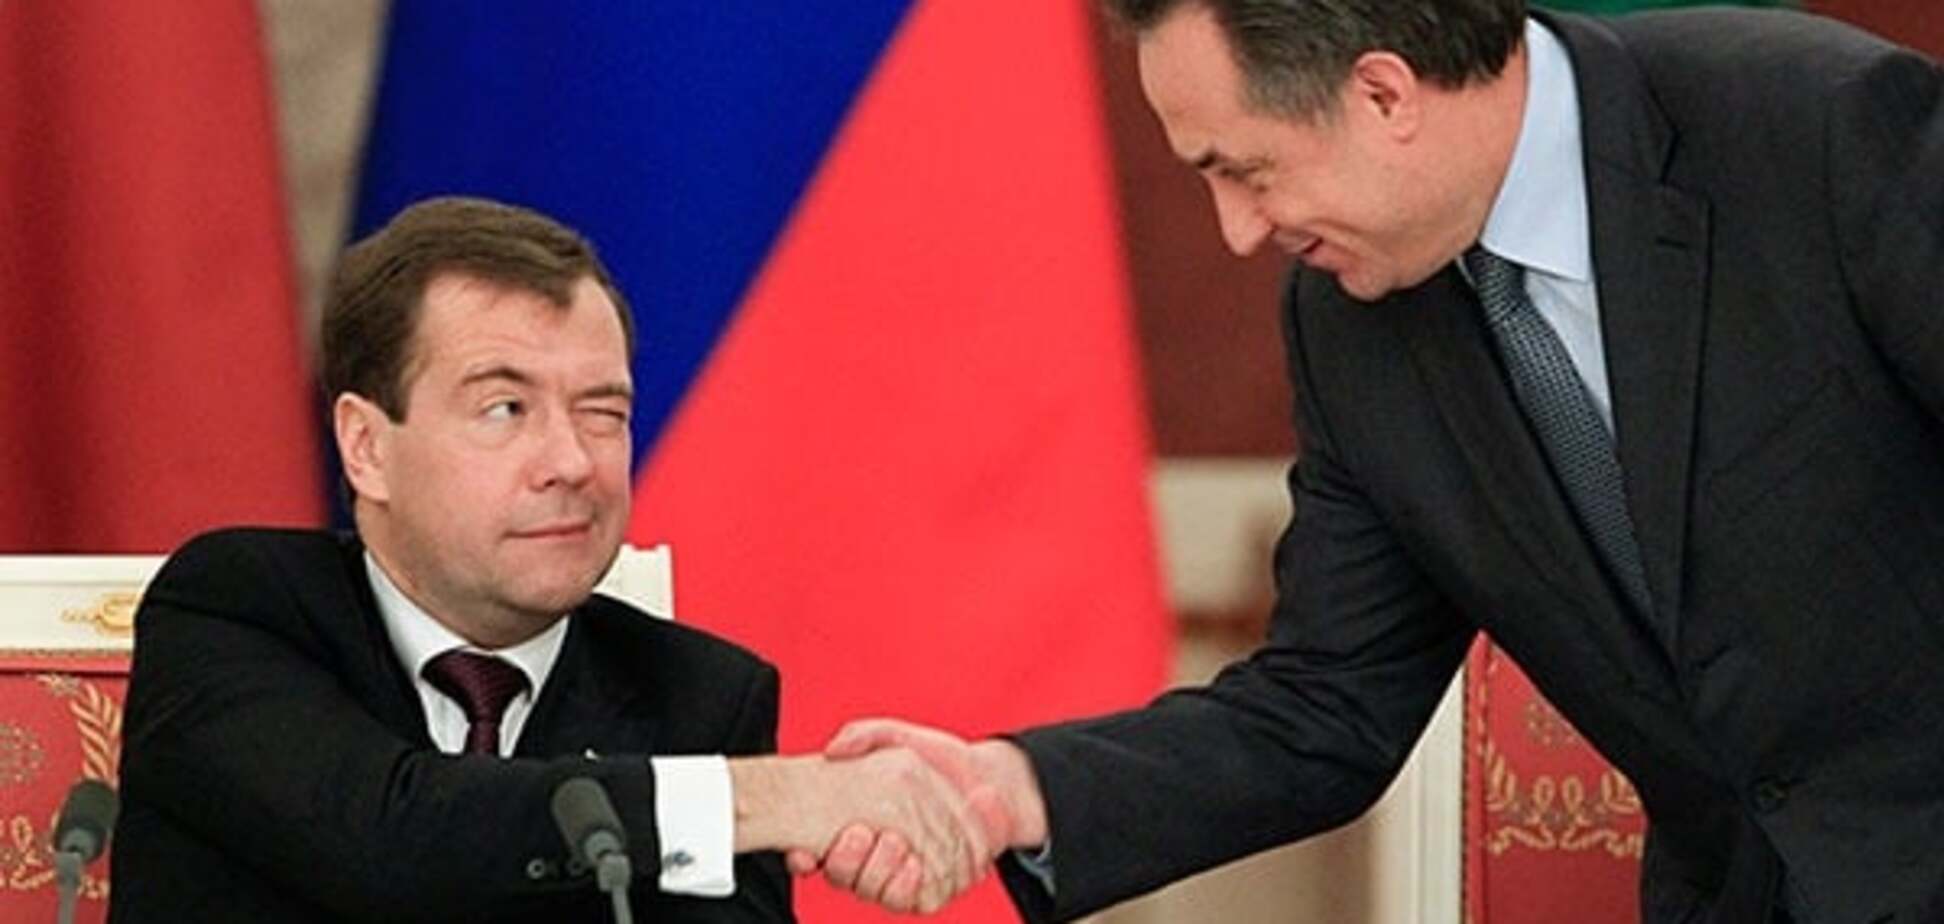 'Спик фром май харт': Медведев эпично подколол спортивного любимца Путина